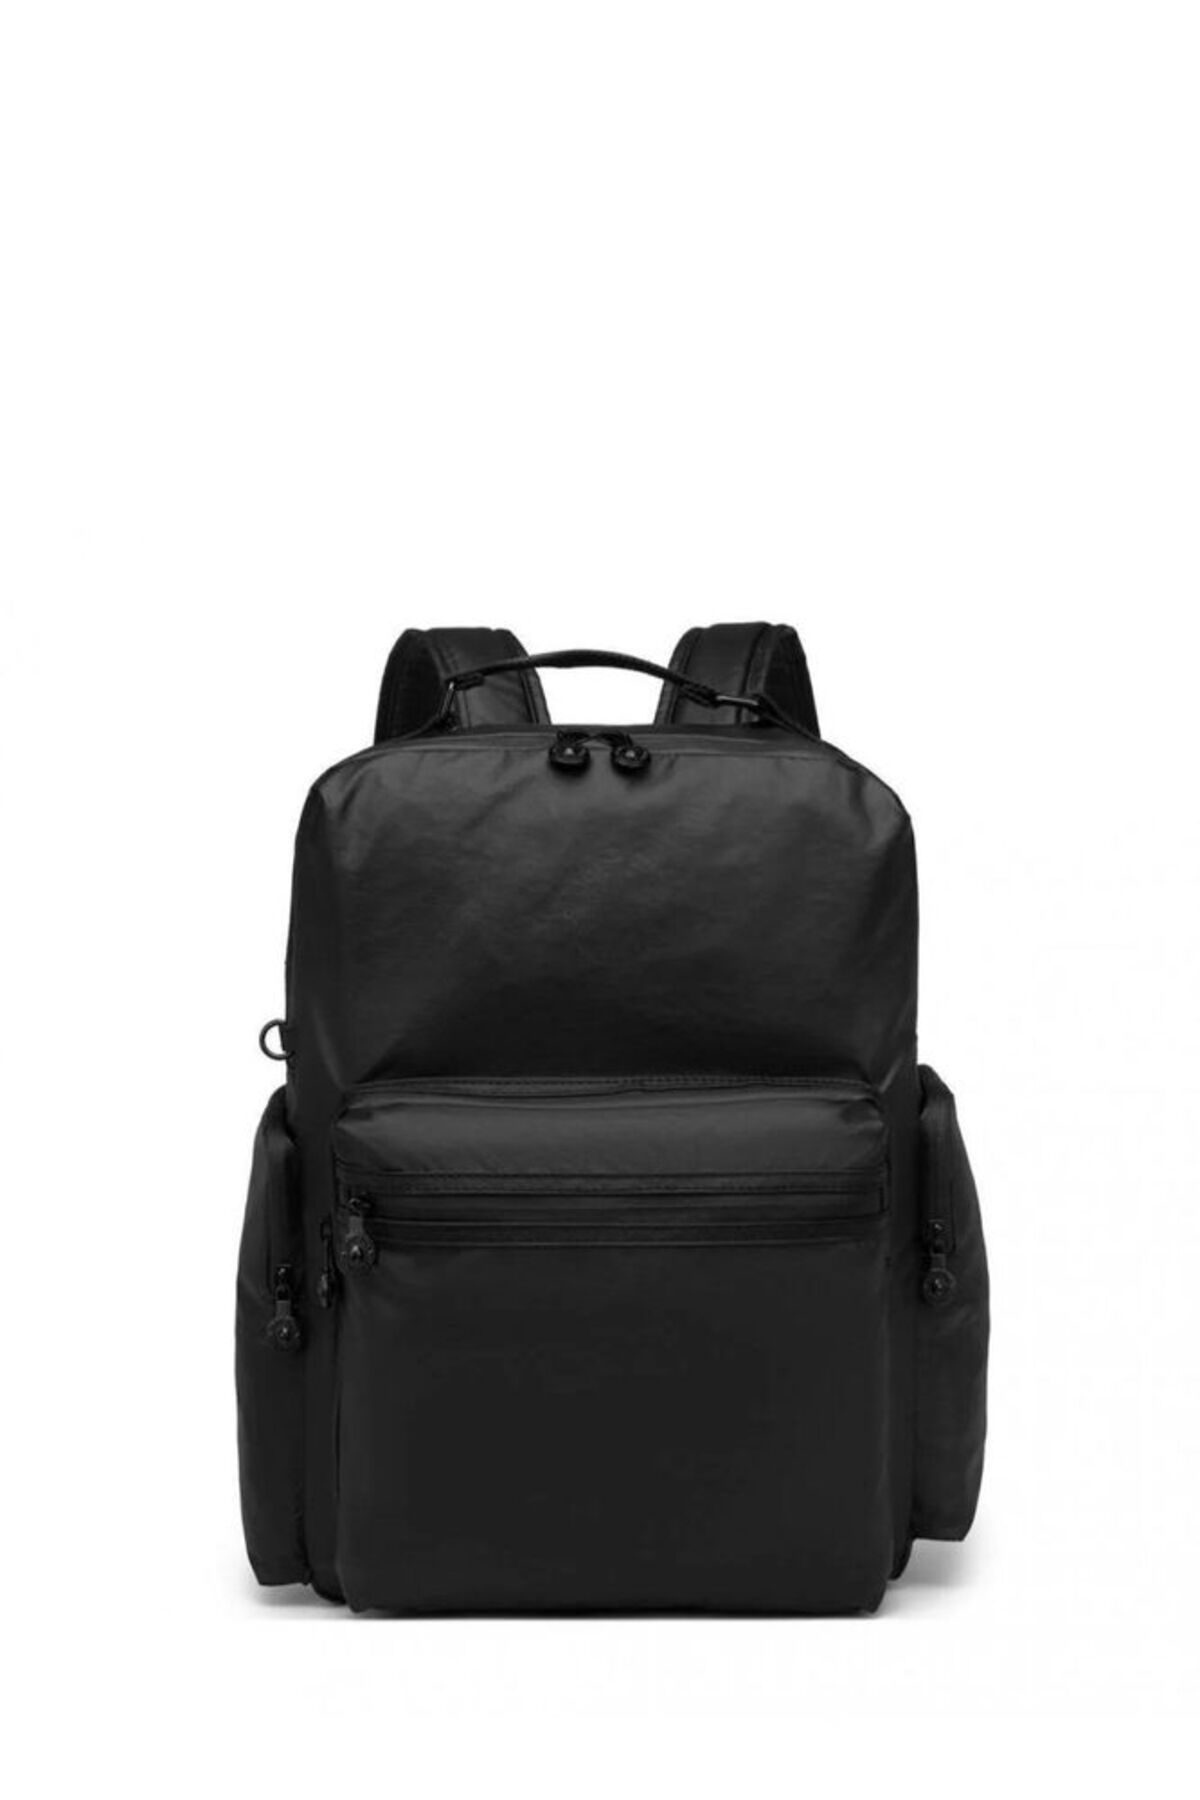 Smart Bags Siyah Unisex Sırt Çantası Smb-3124